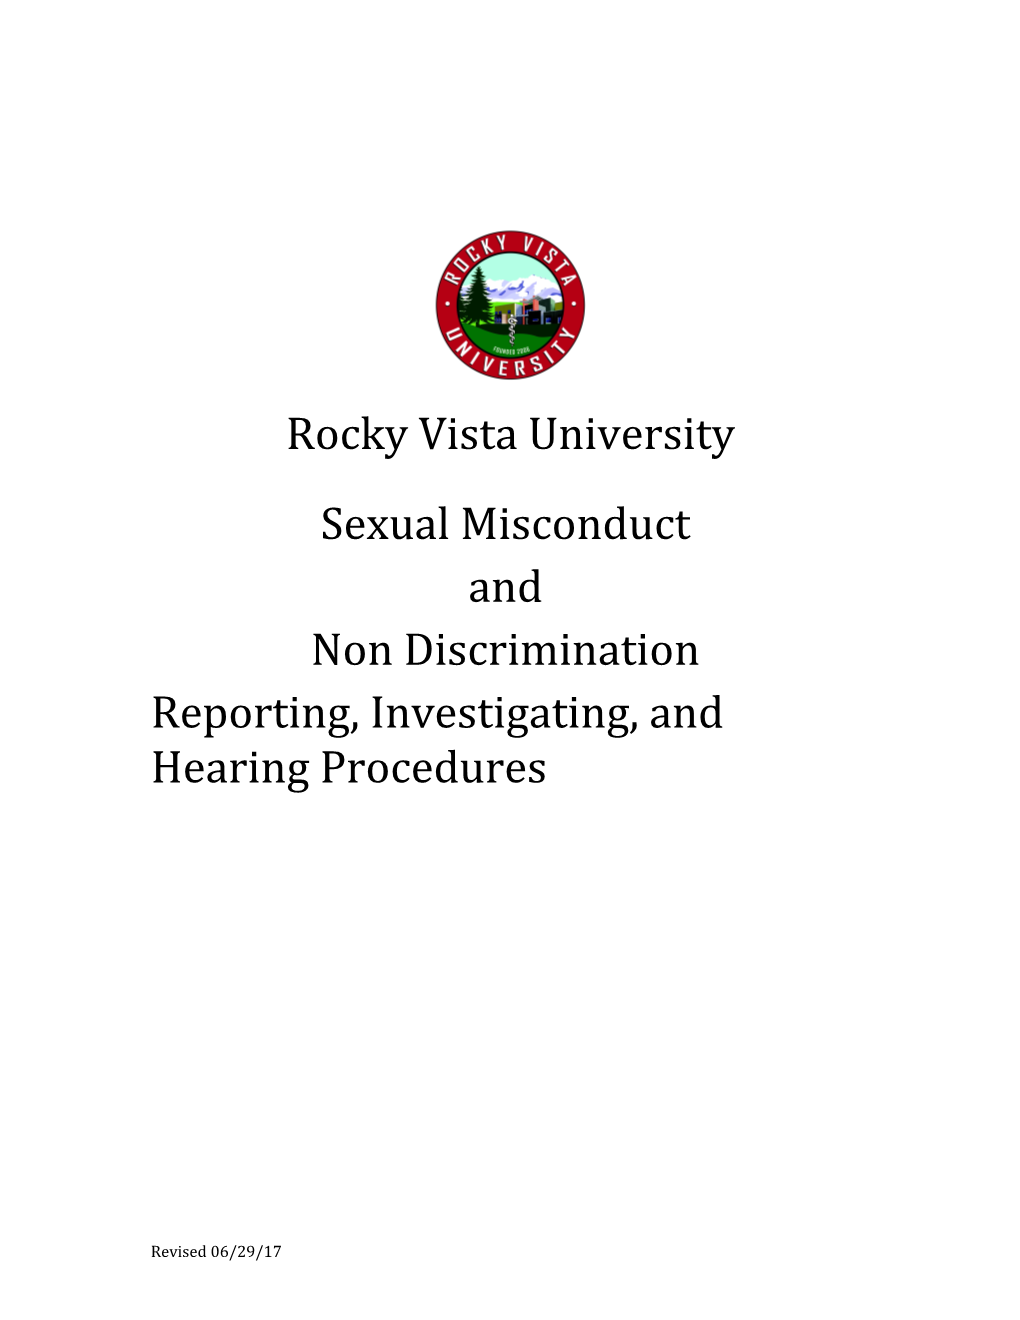 Sexual Misconduct Investigative Procedures